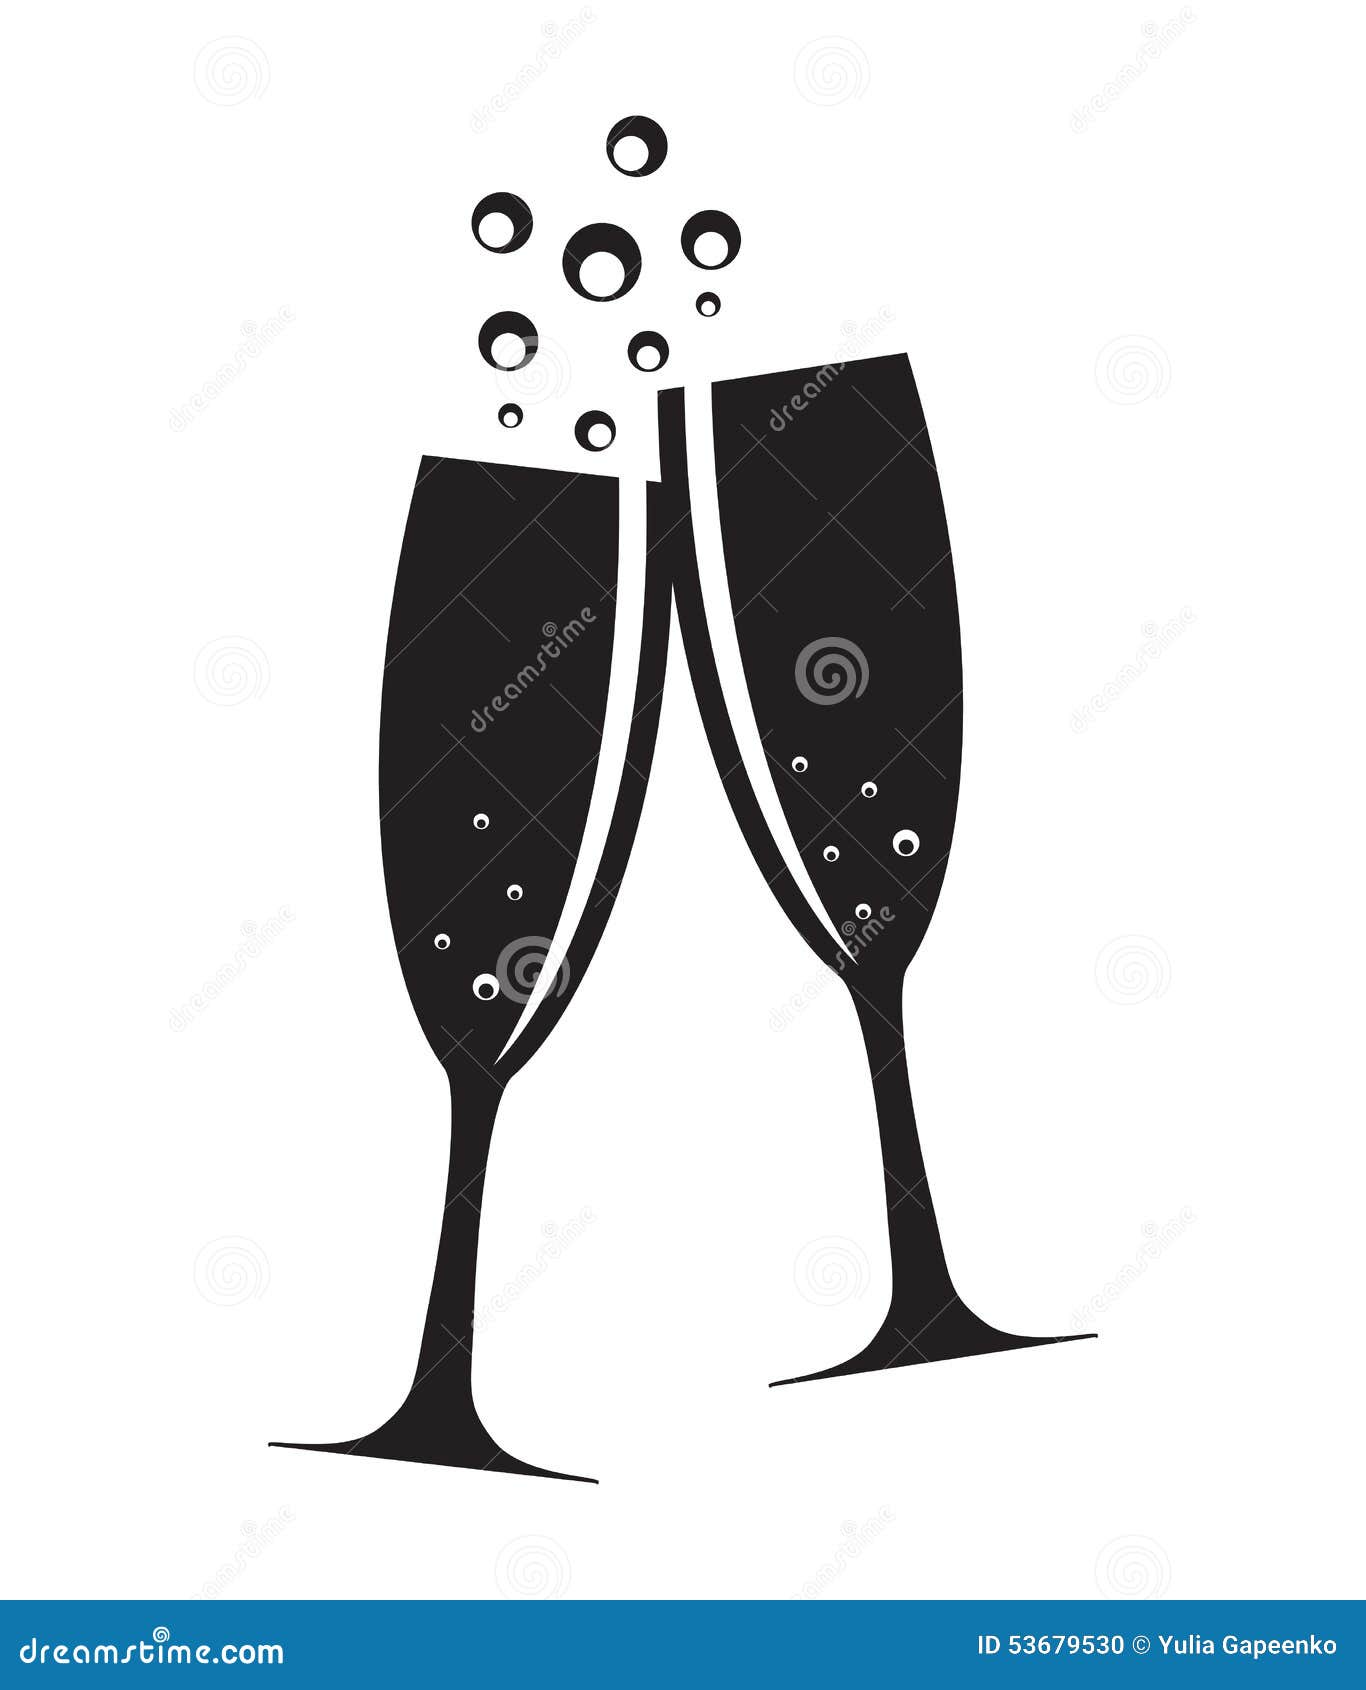 https://thumbs.dreamstime.com/z/two-glasses-champagne-silhouette-vector-illustration-53679530.jpg